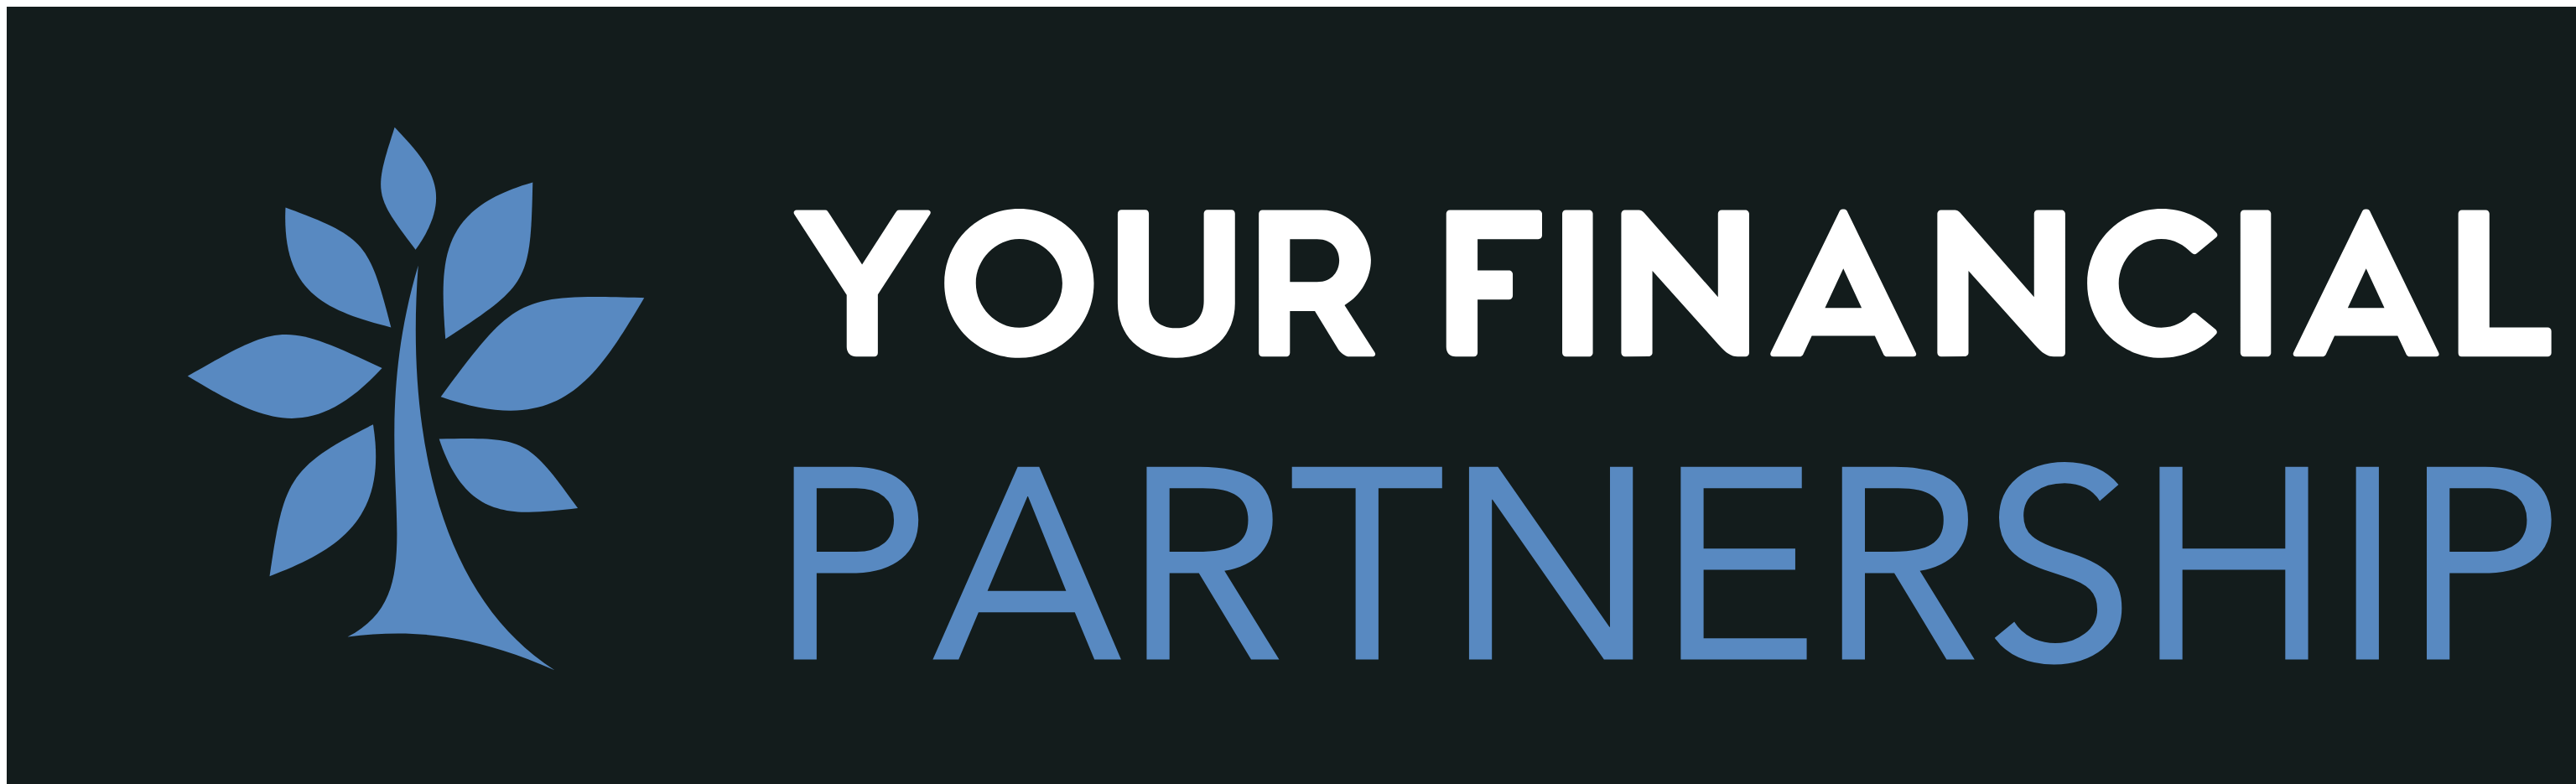 Your Financial Partnership